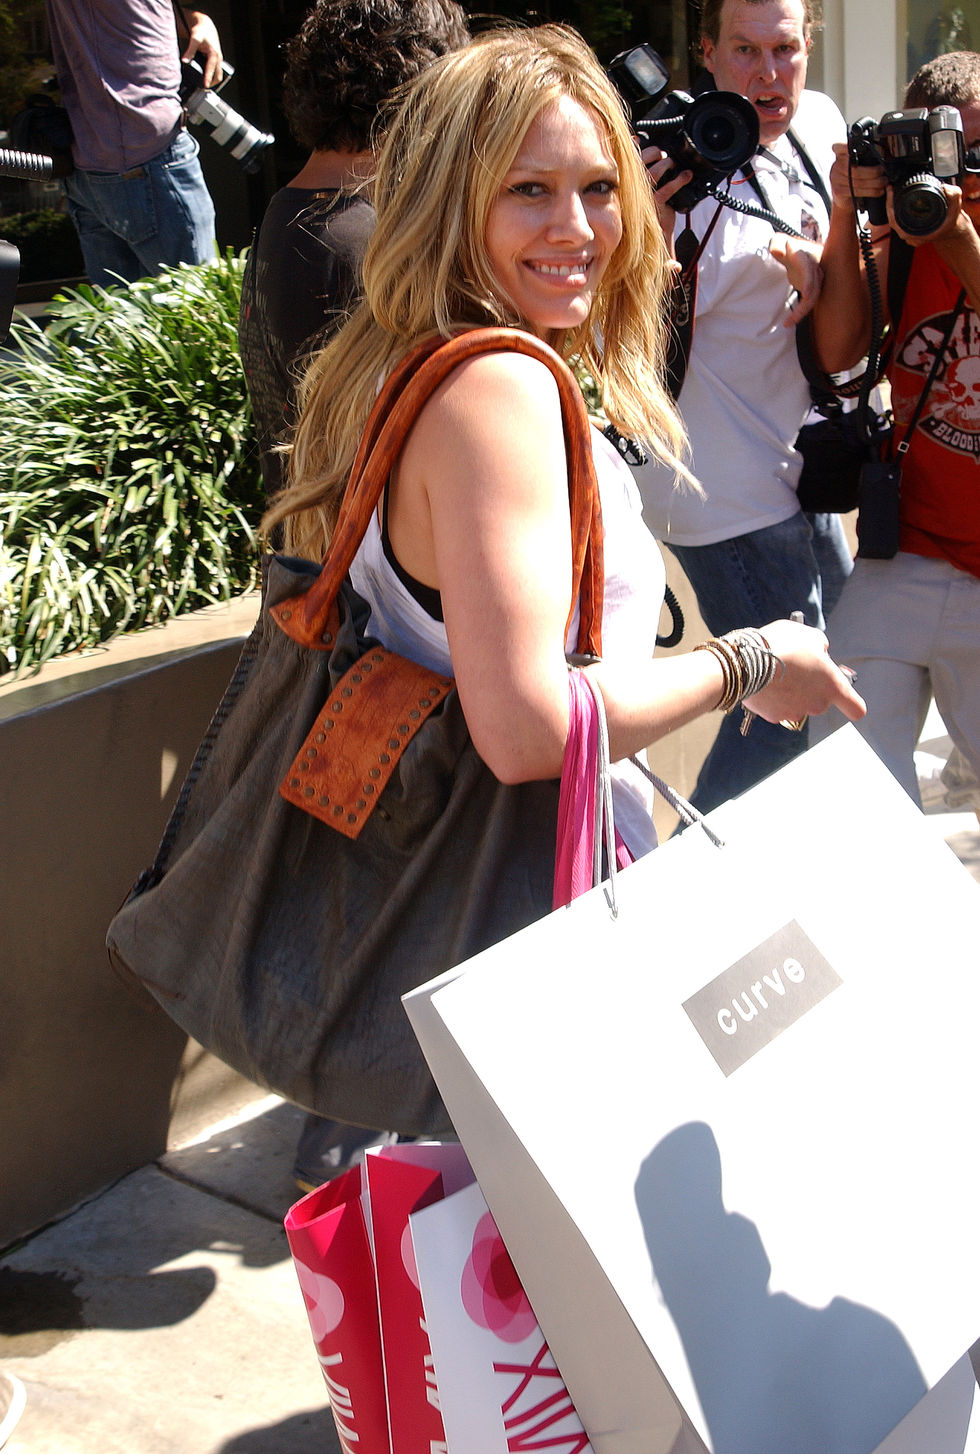 Pics of Hilary Duff Shopping